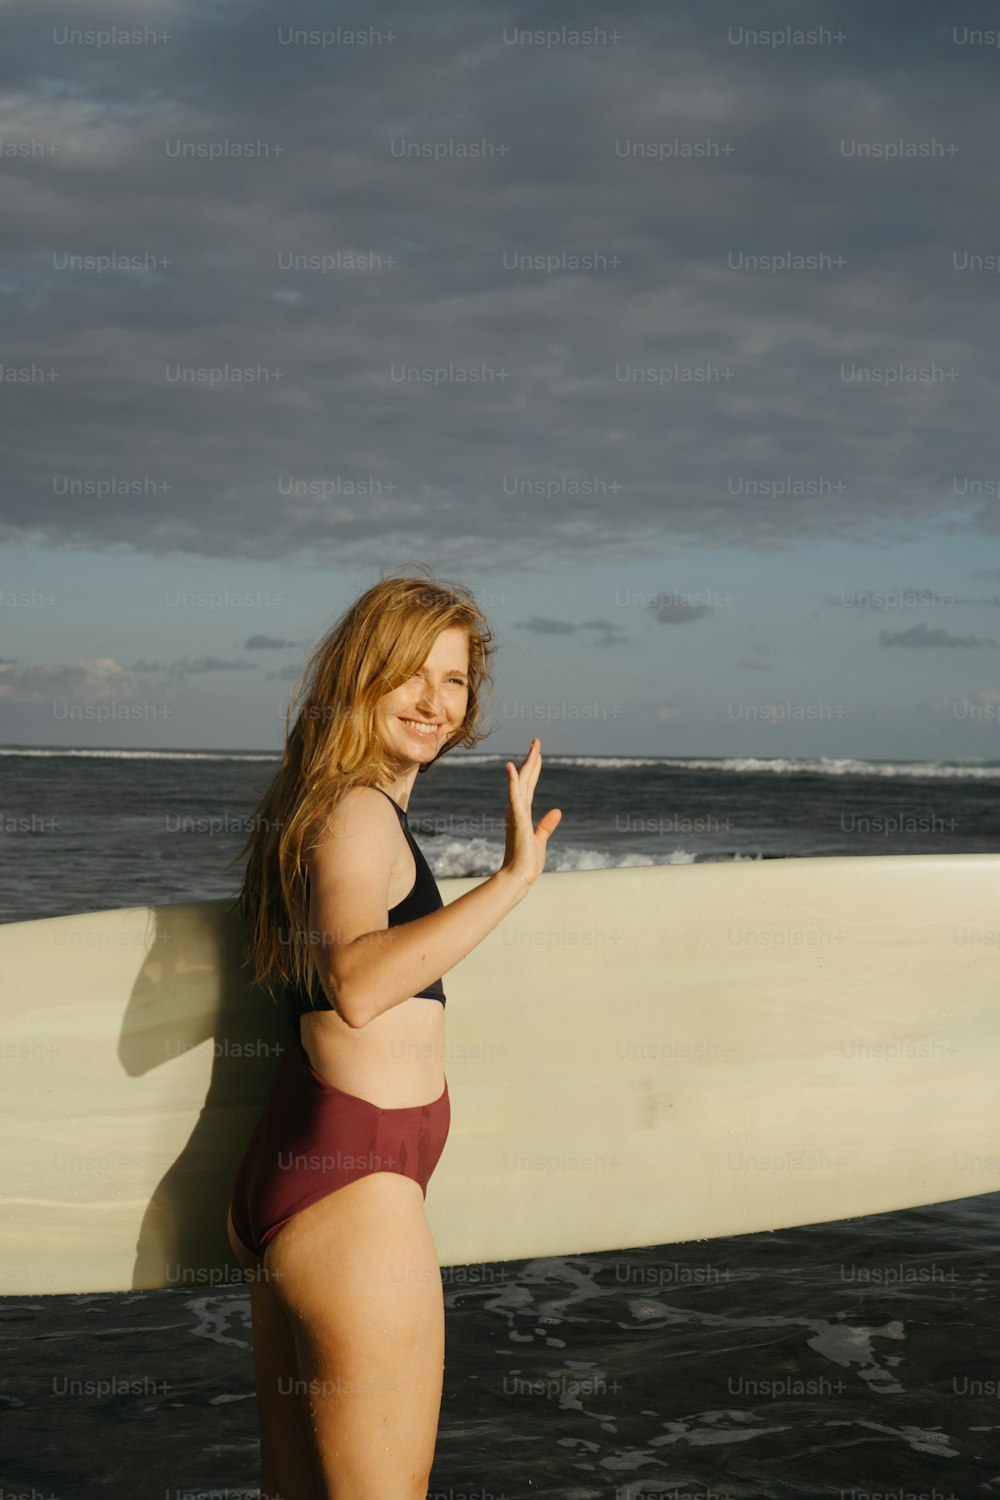 a woman in a bikini holding a surfboard on the beach